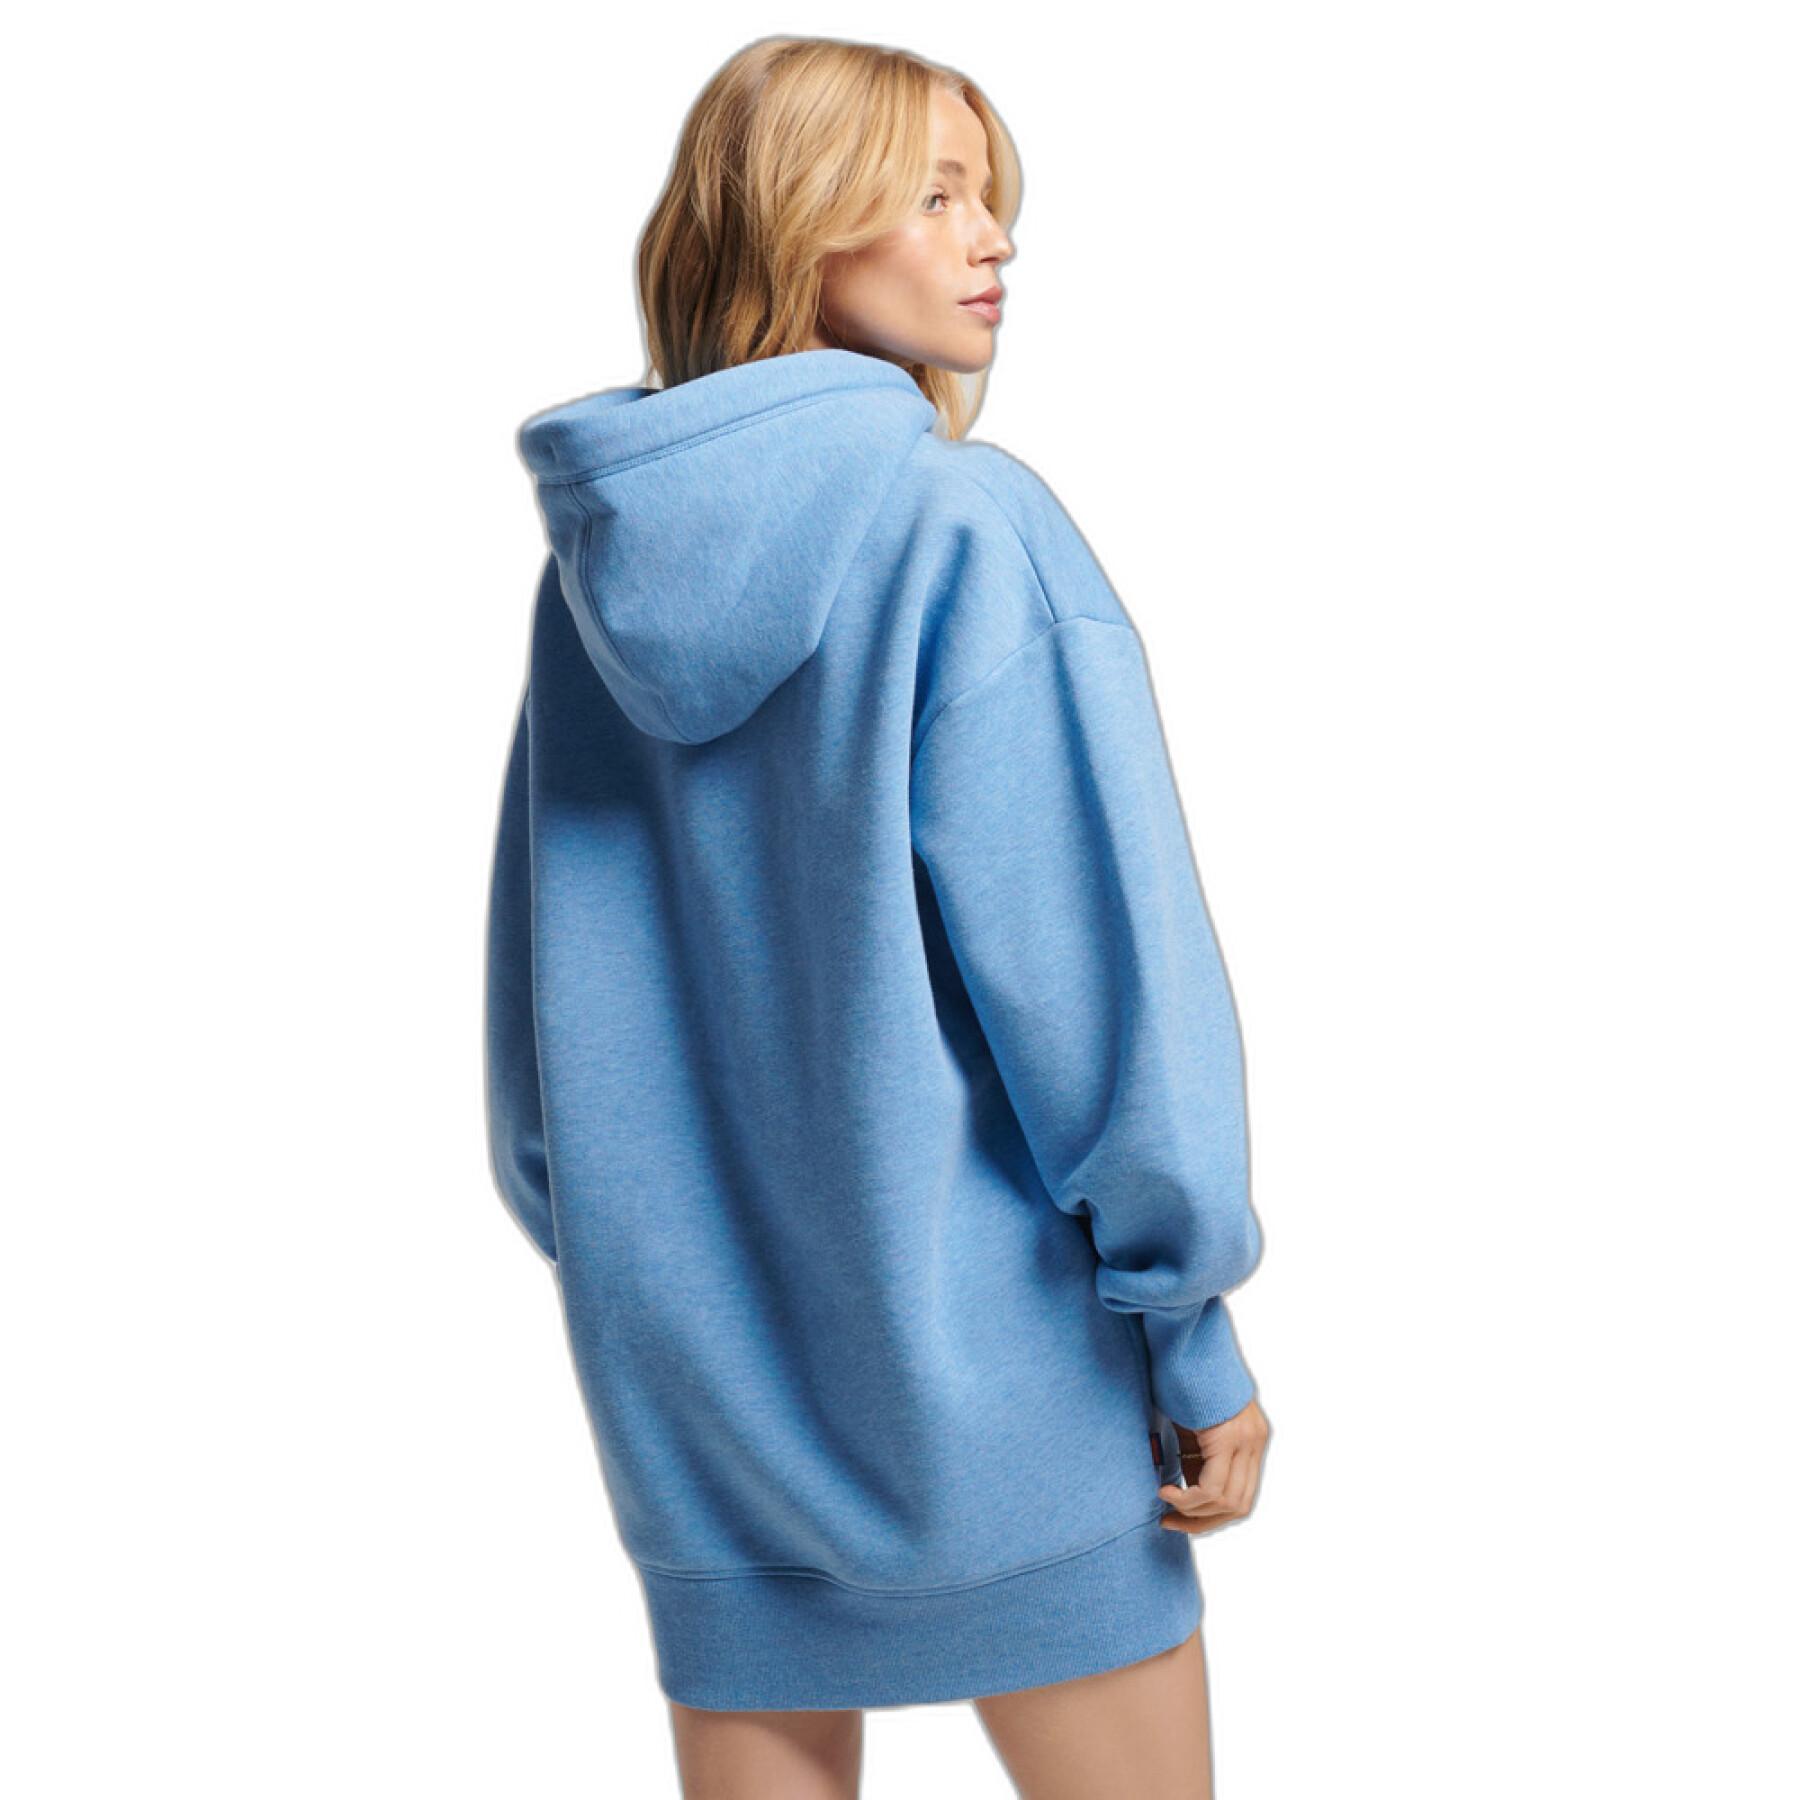 Organic cotton sweatshirt dress for women Superdry